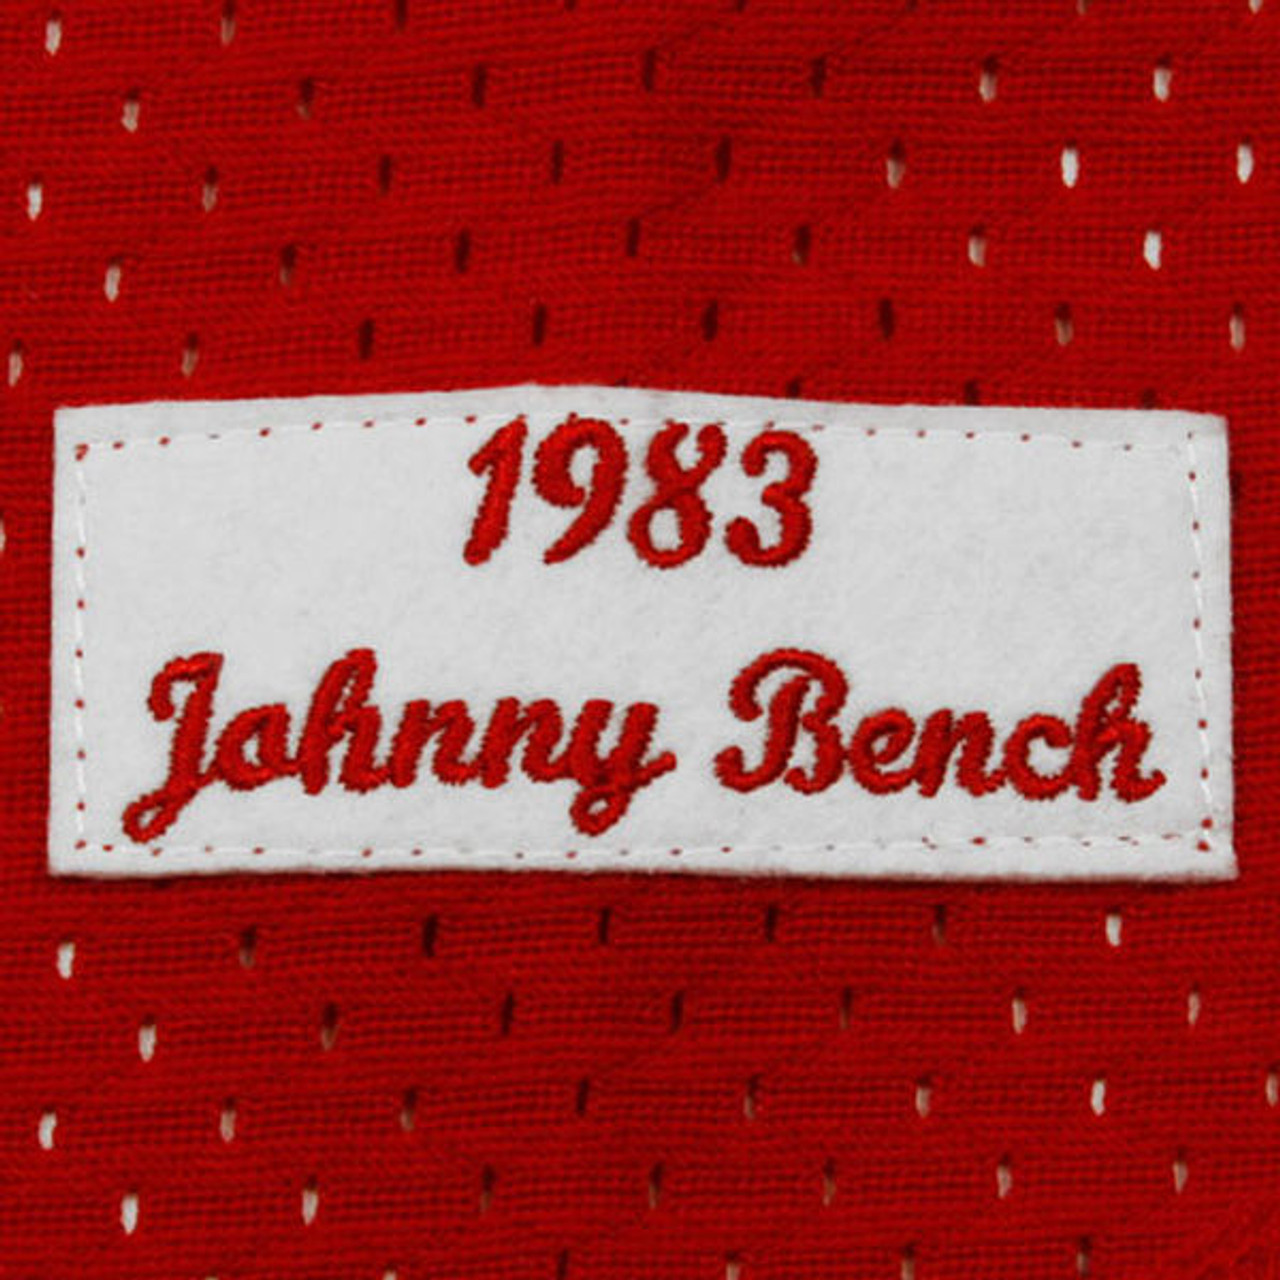 Men's Mitchell & Ness Johnny Bench 1983 Cincinnati Reds Batting